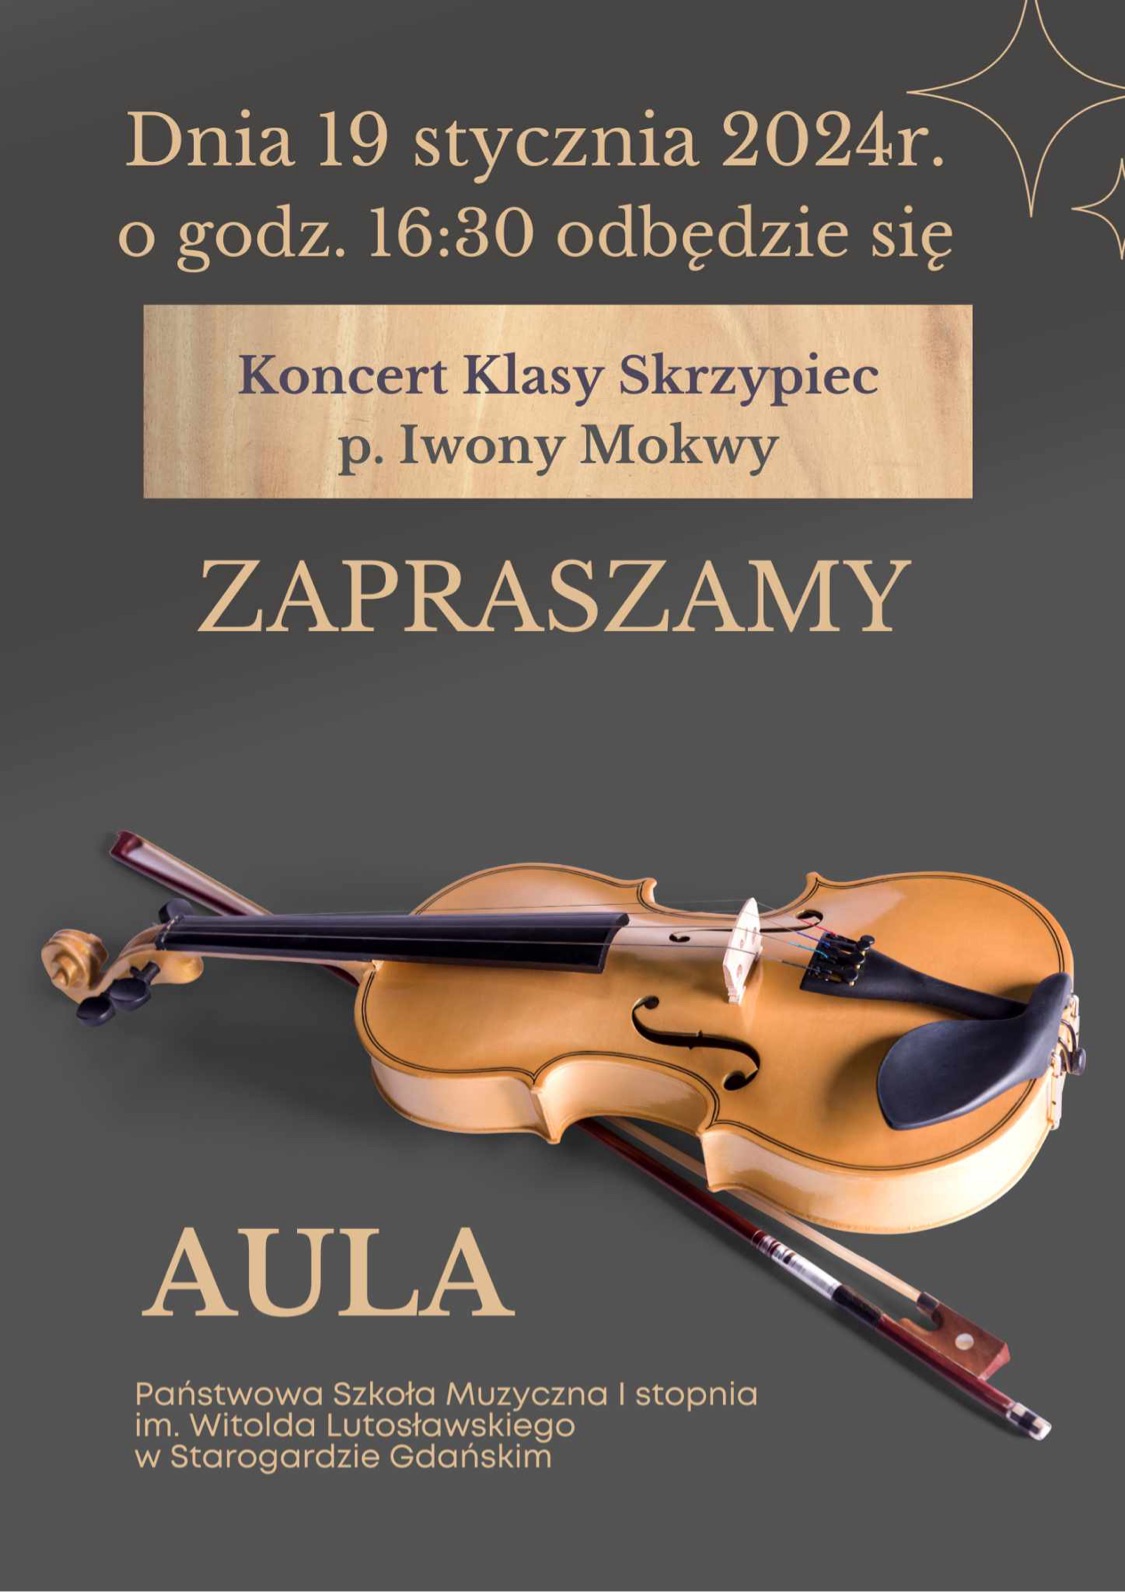 Plakat koncertu klasy skrzypiec